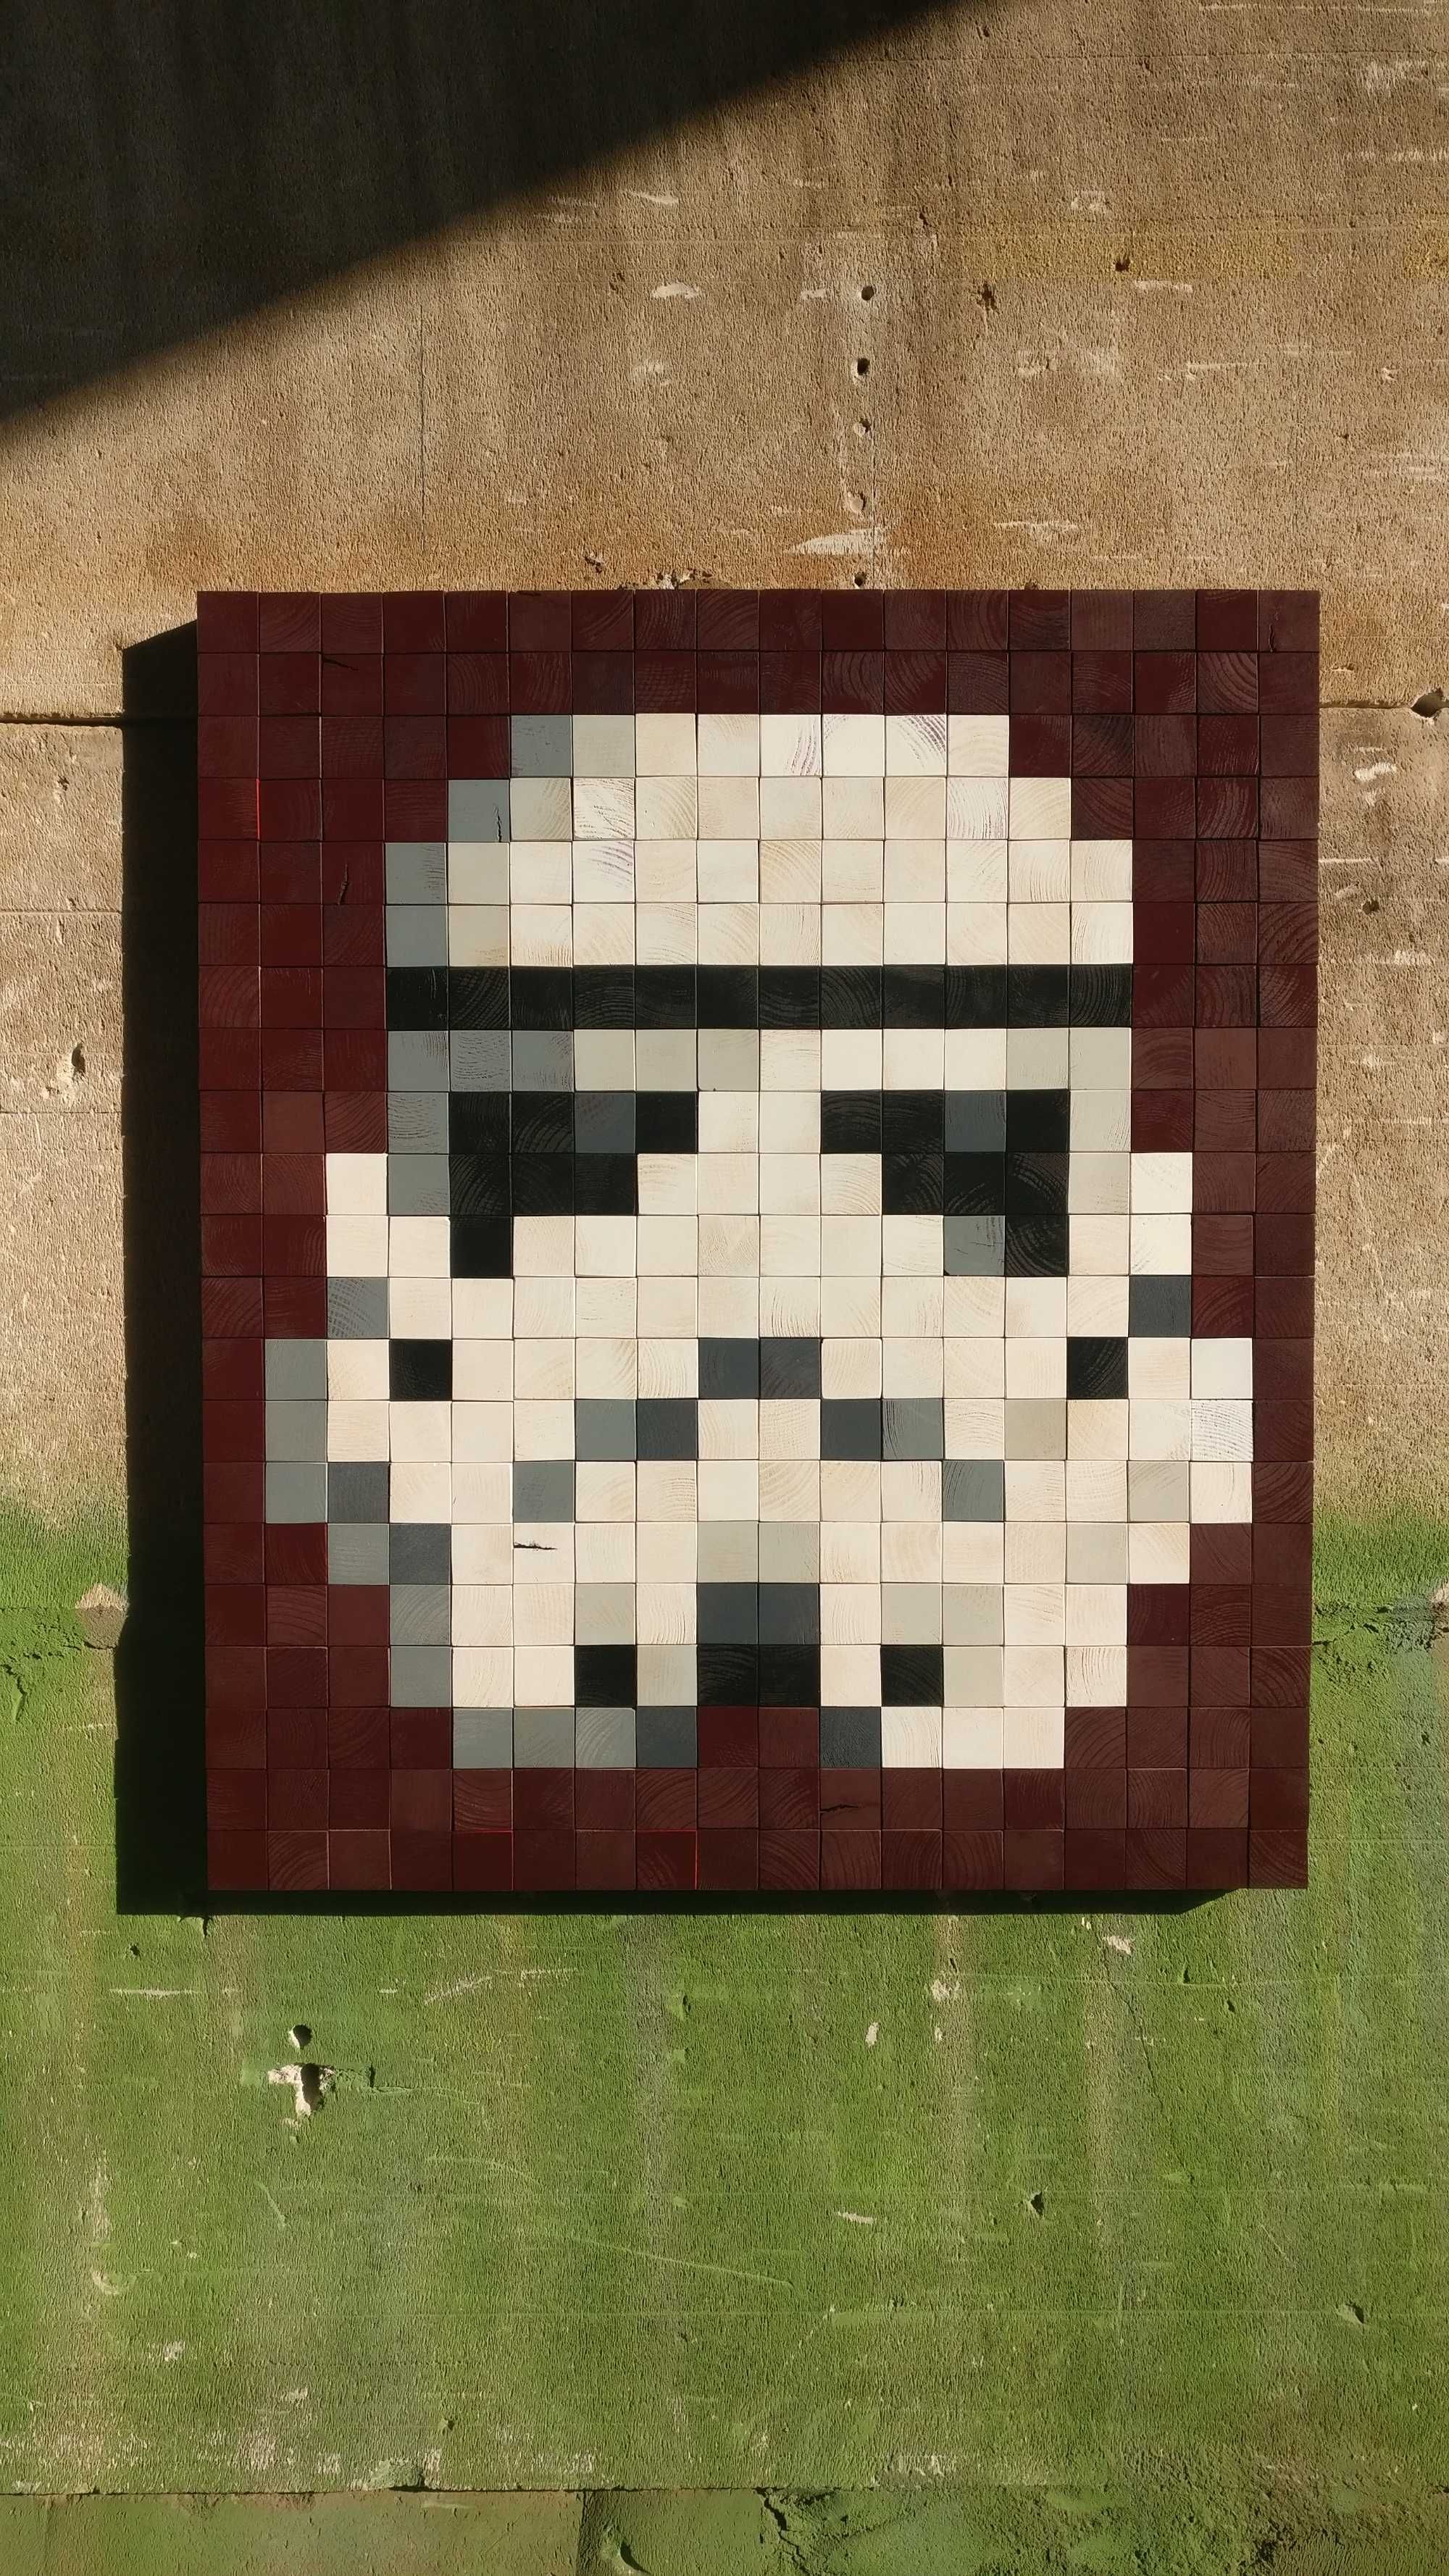 Pixel Art | Storm Trooper | Star Wars | Tablou lemn masiv 72,6x84,7cm